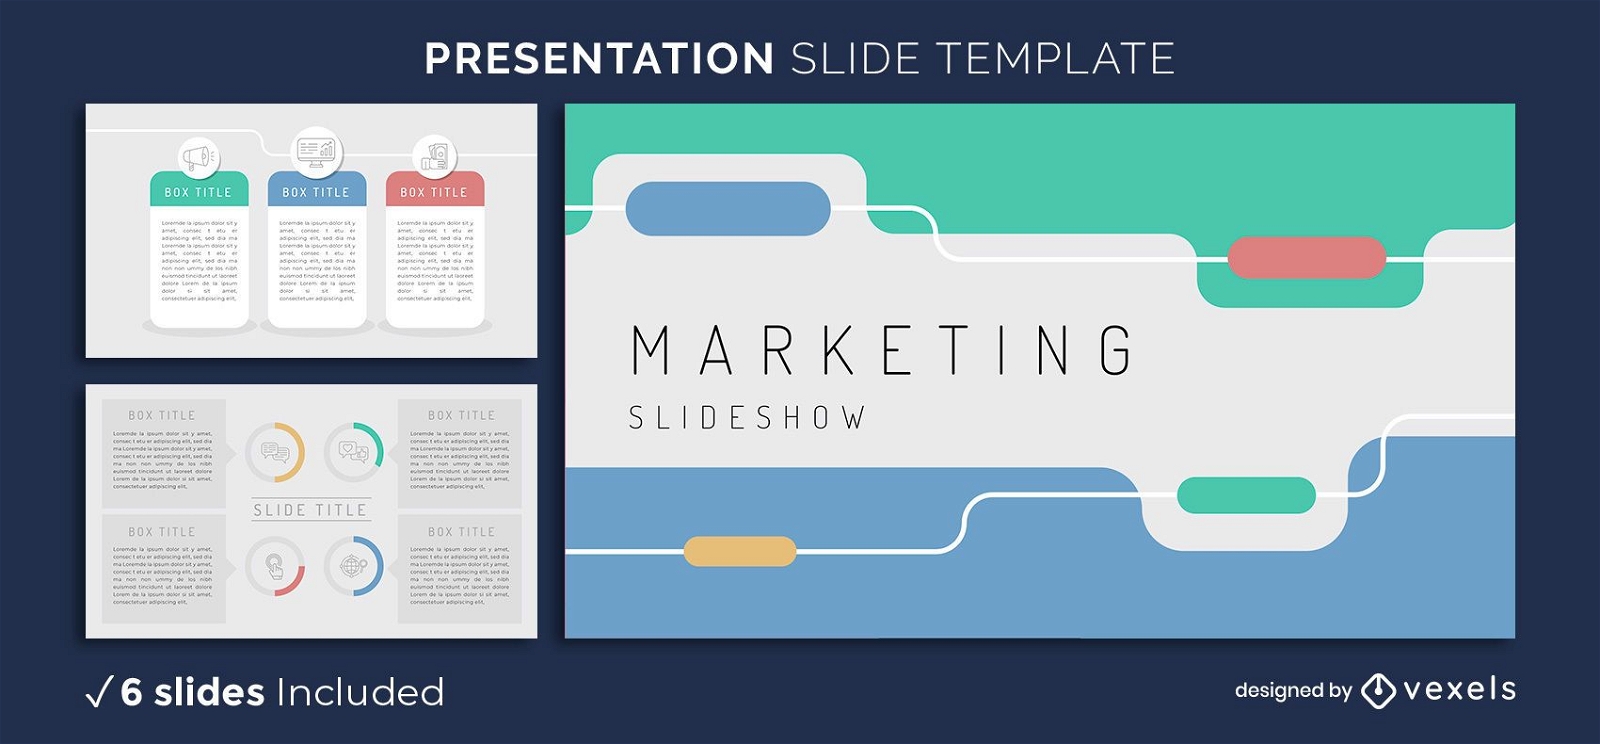 Simple Marketing Presentation Template